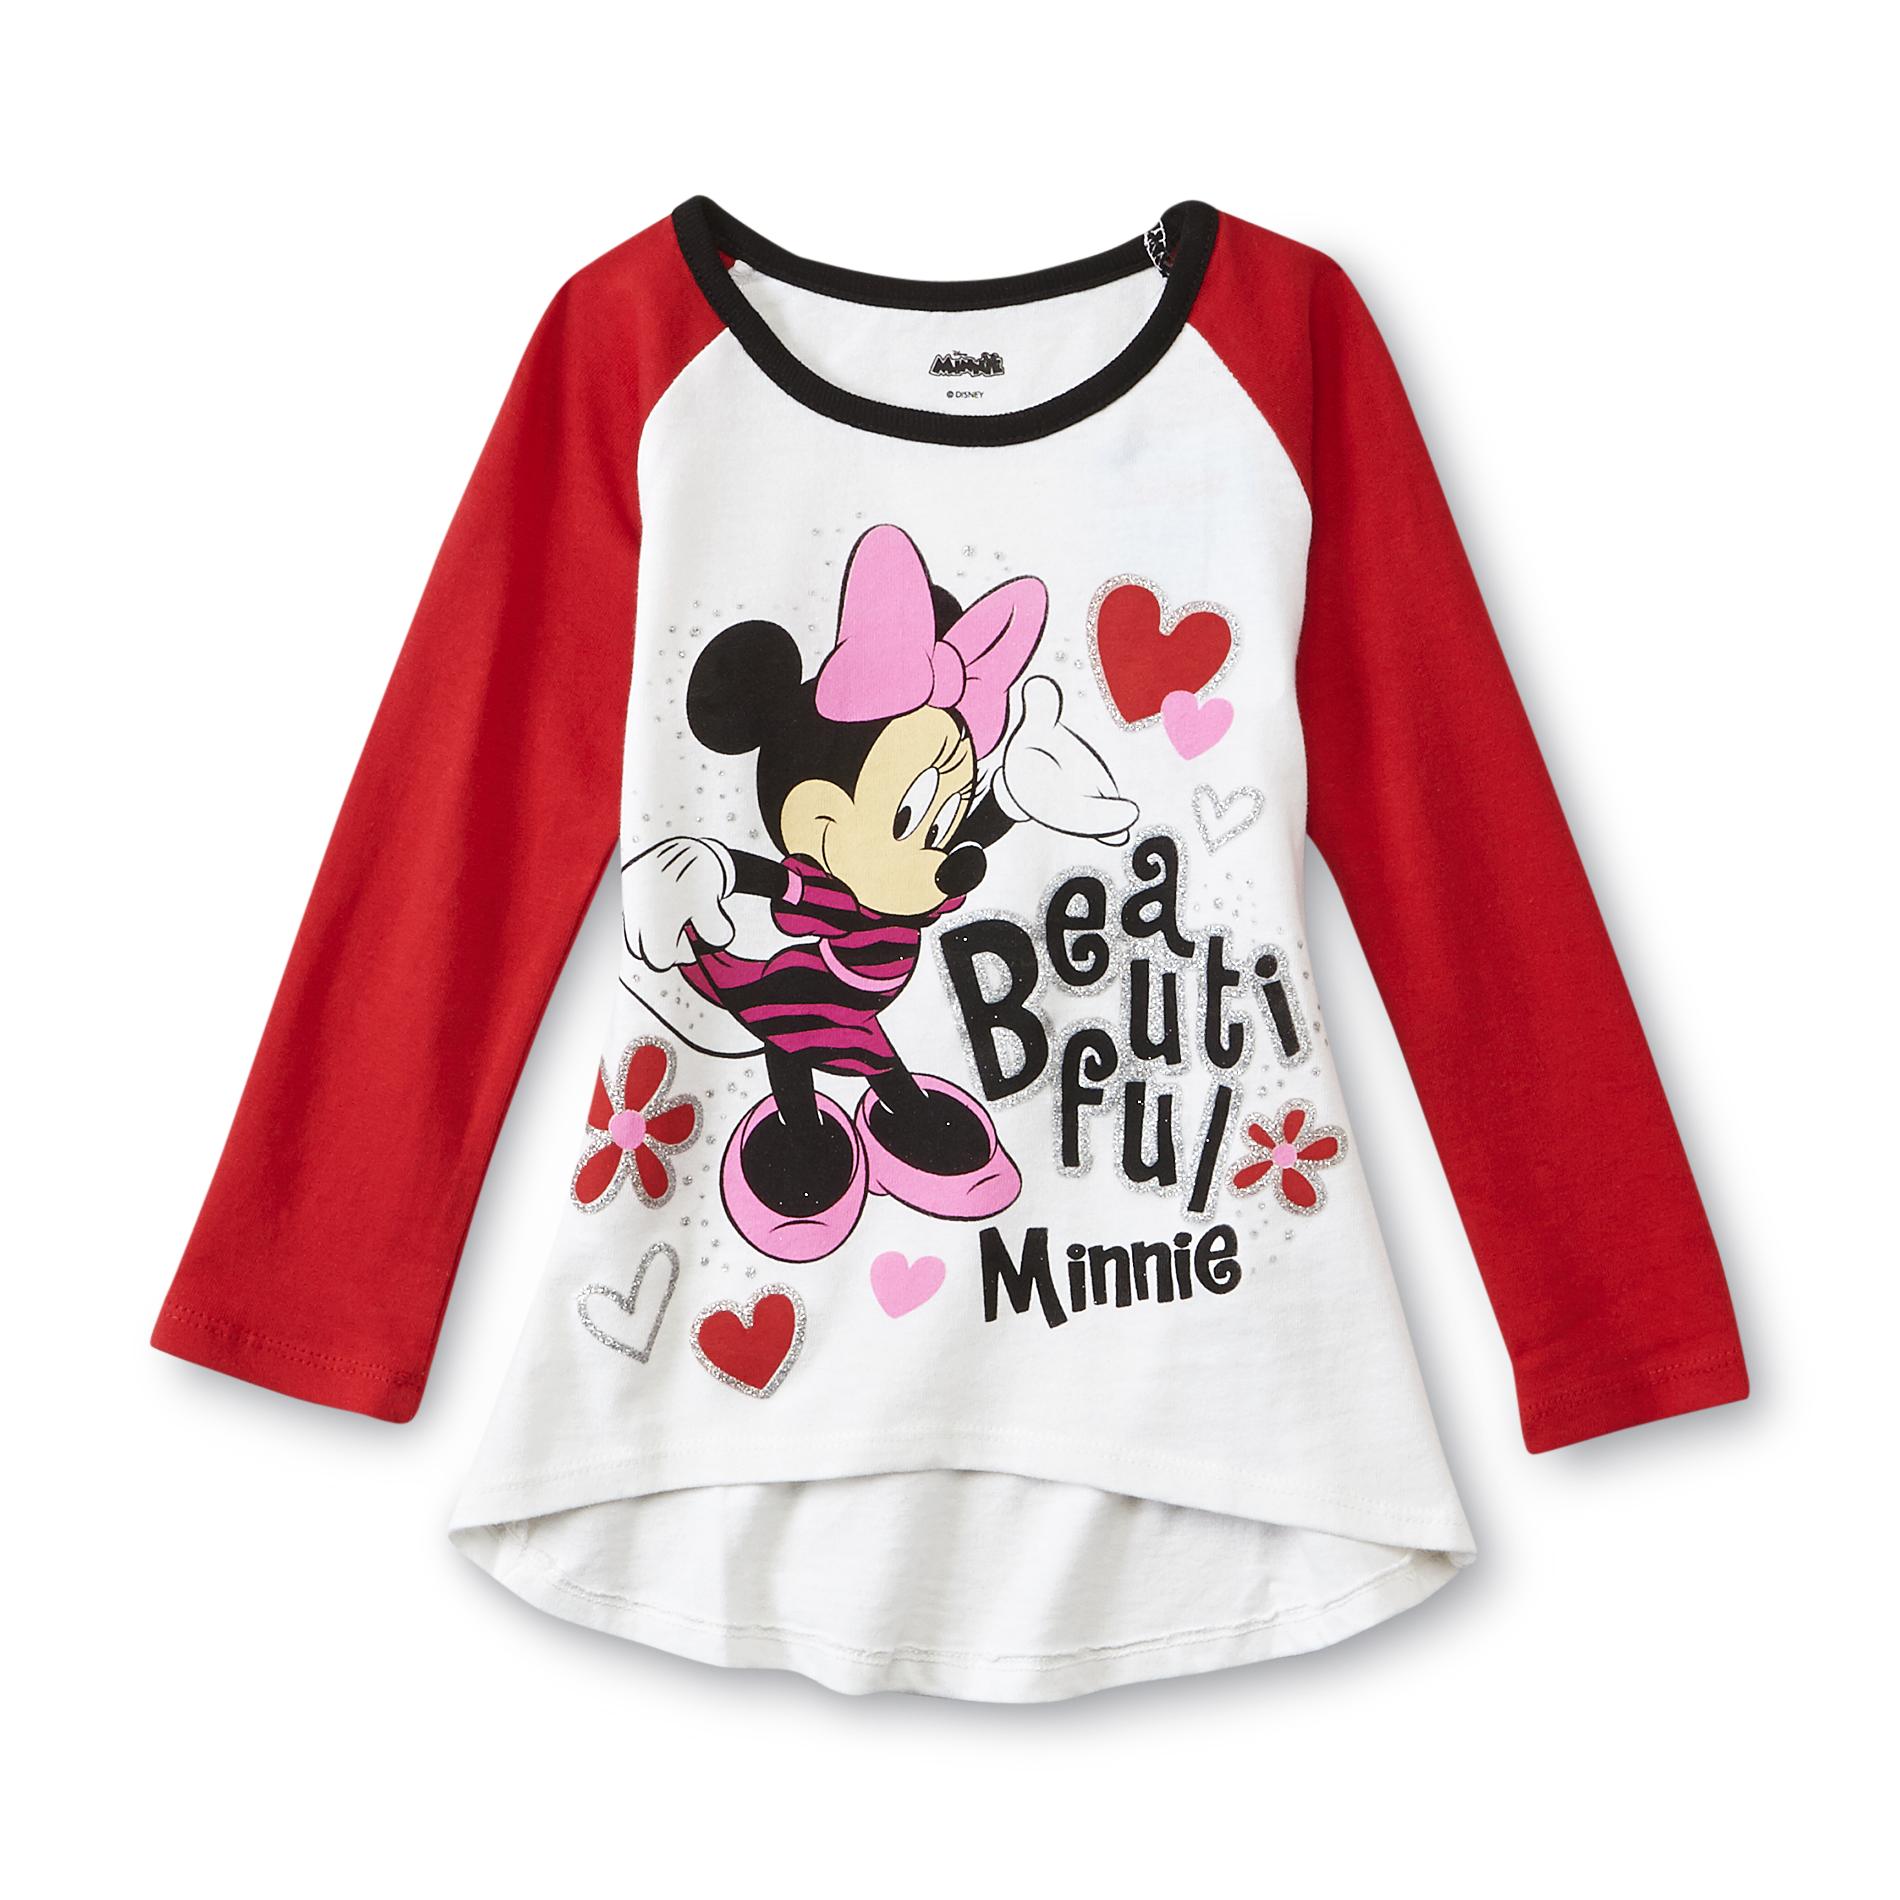 Disney Minnie Mouse Toddler Girl's T-Shirt - Beautiful